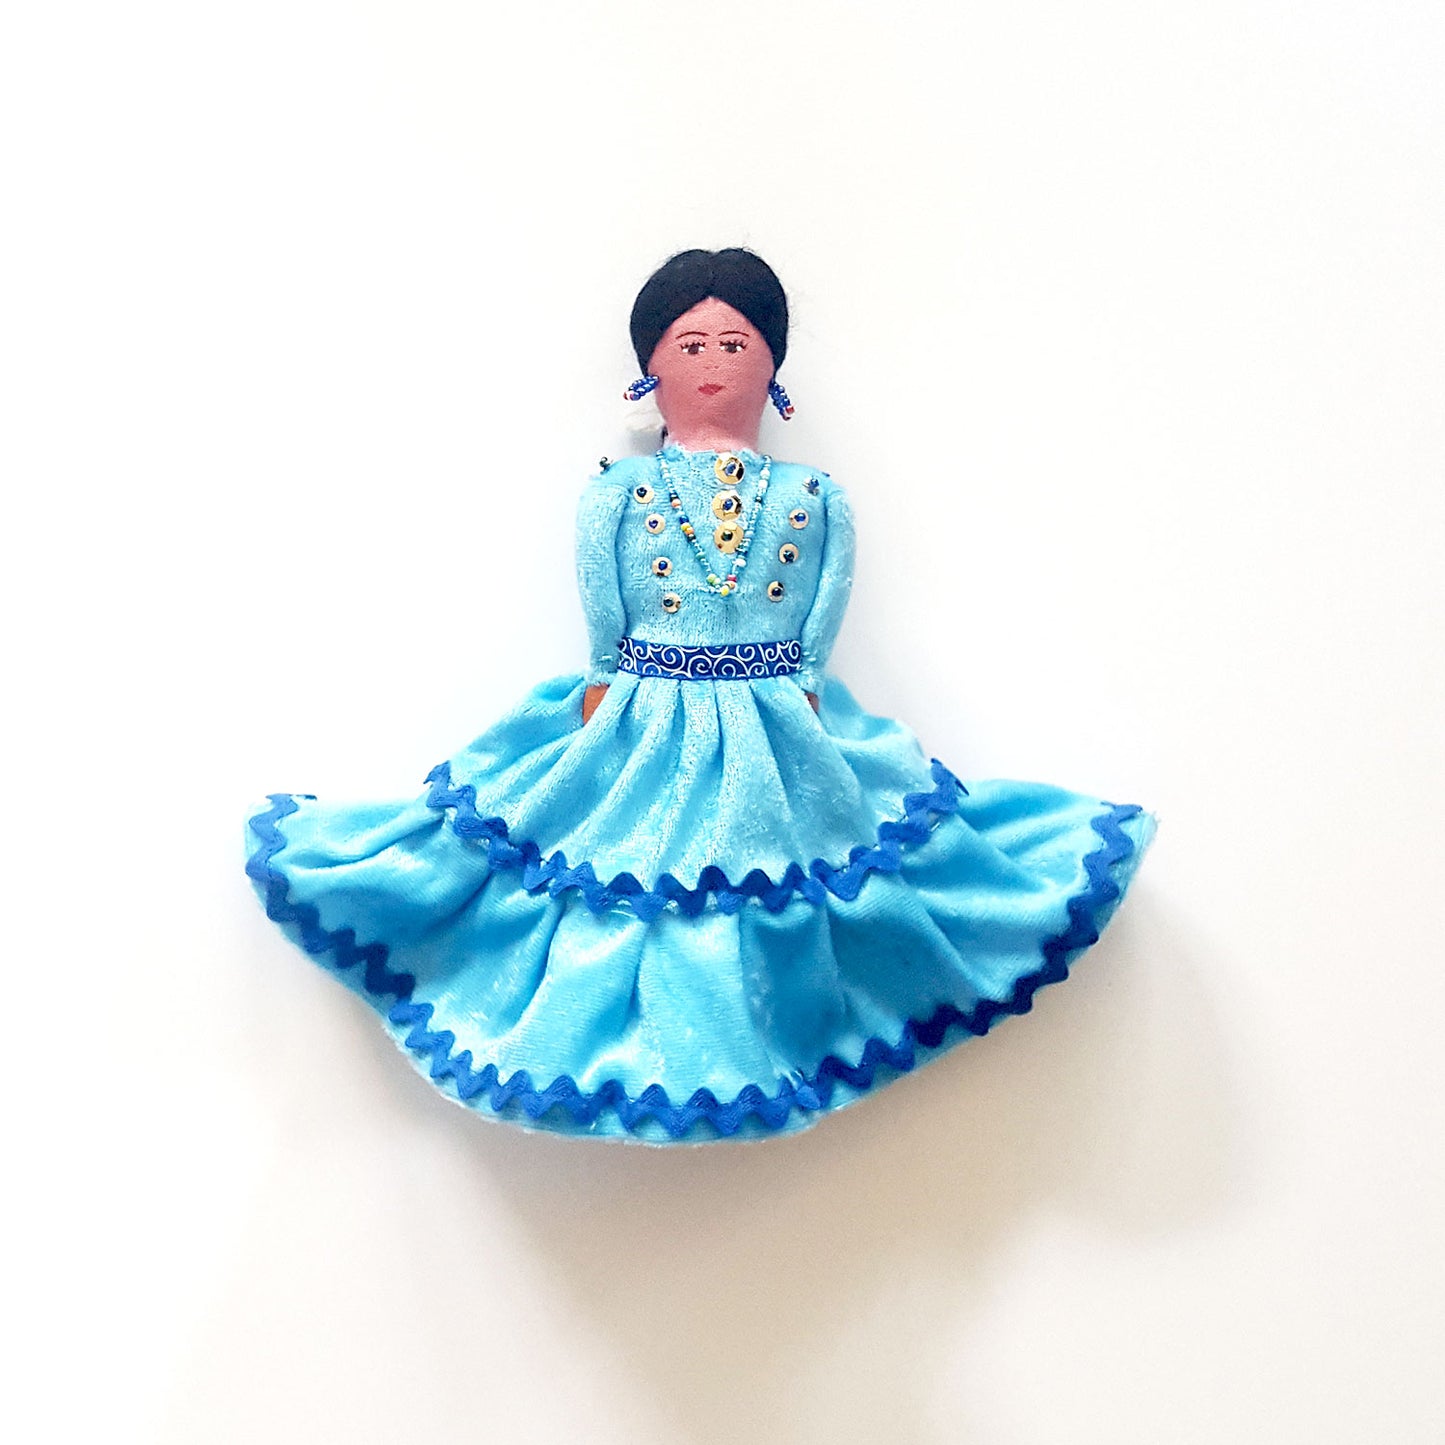 Navajo Doll - Assorted Dress Colors